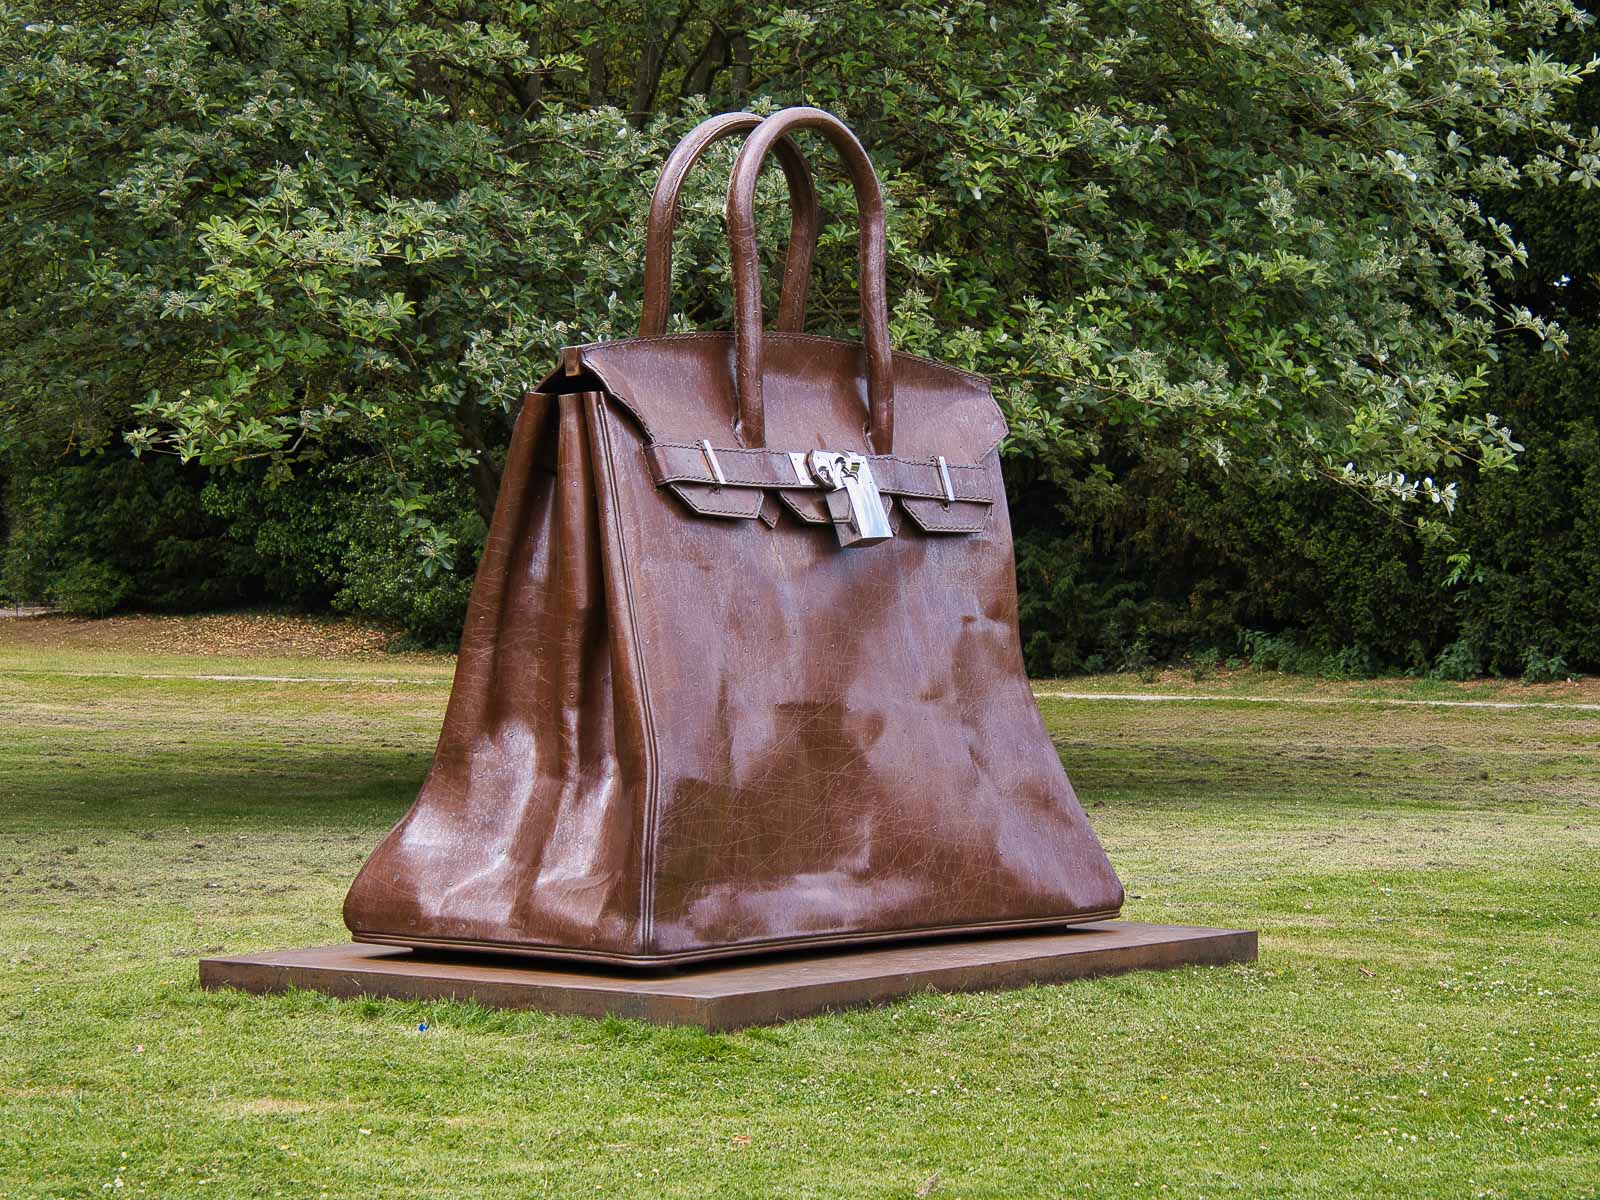 A handbag? Philip Dearle